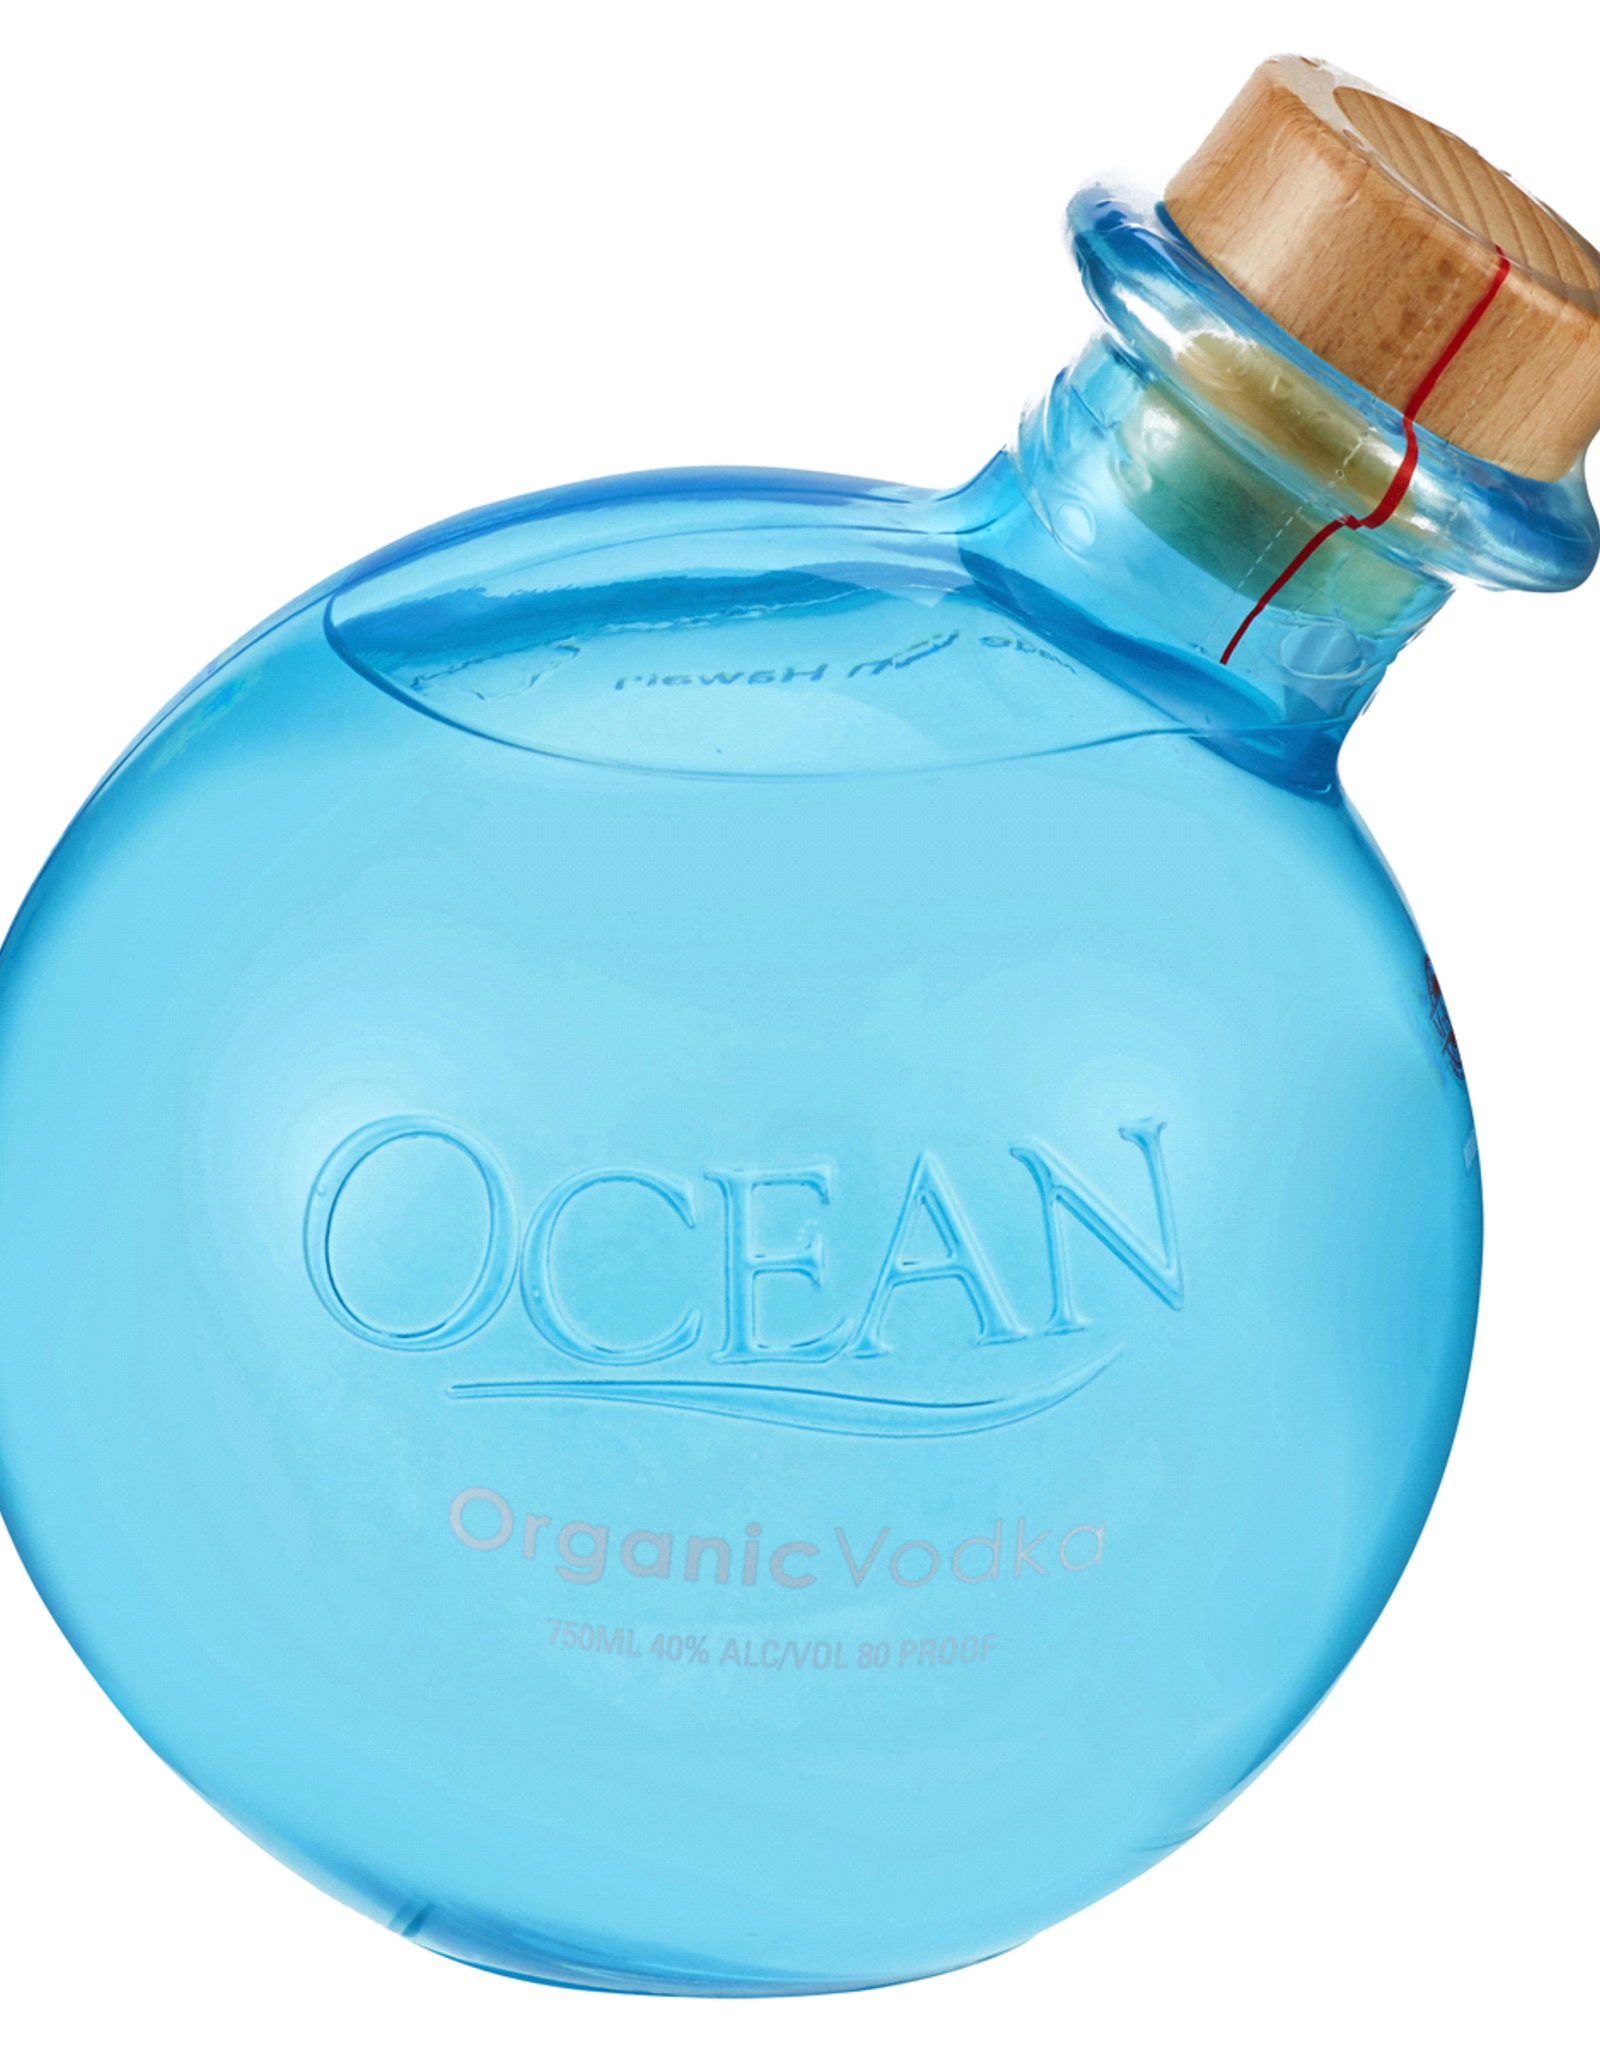 Ocean Ocean Organic Vodka 750 mL